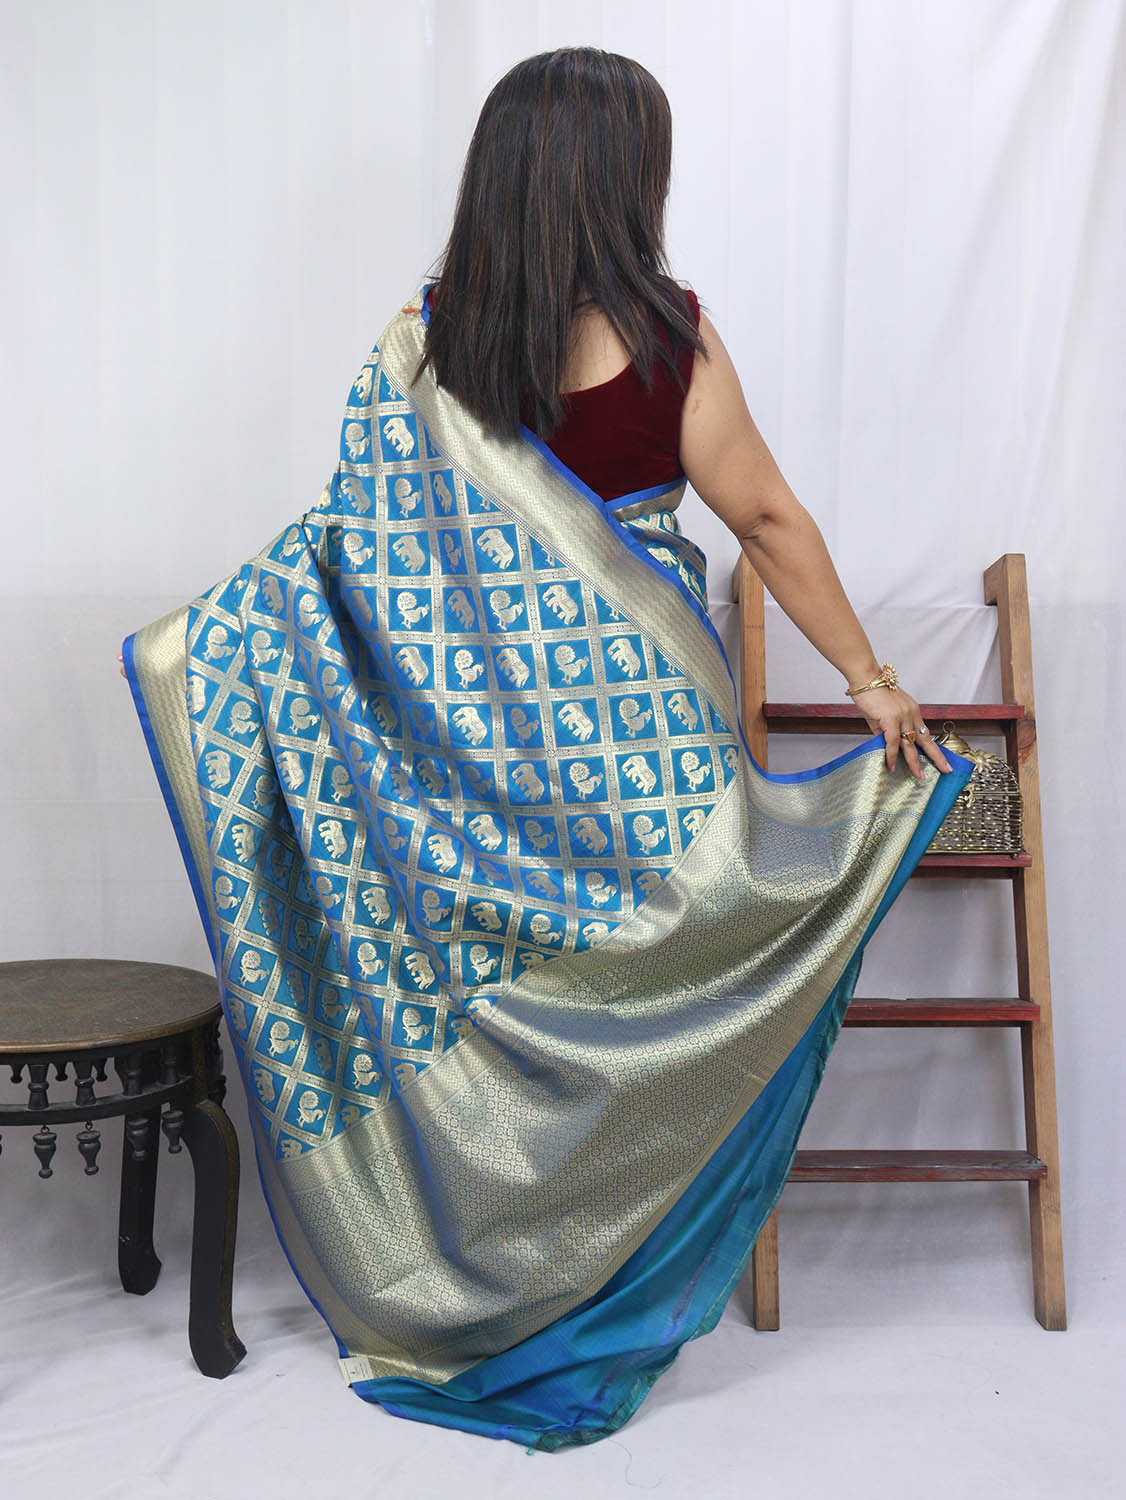 Shop the Finest Blue Handloom Banarasi Silk Saree Online - Exclusive Collection